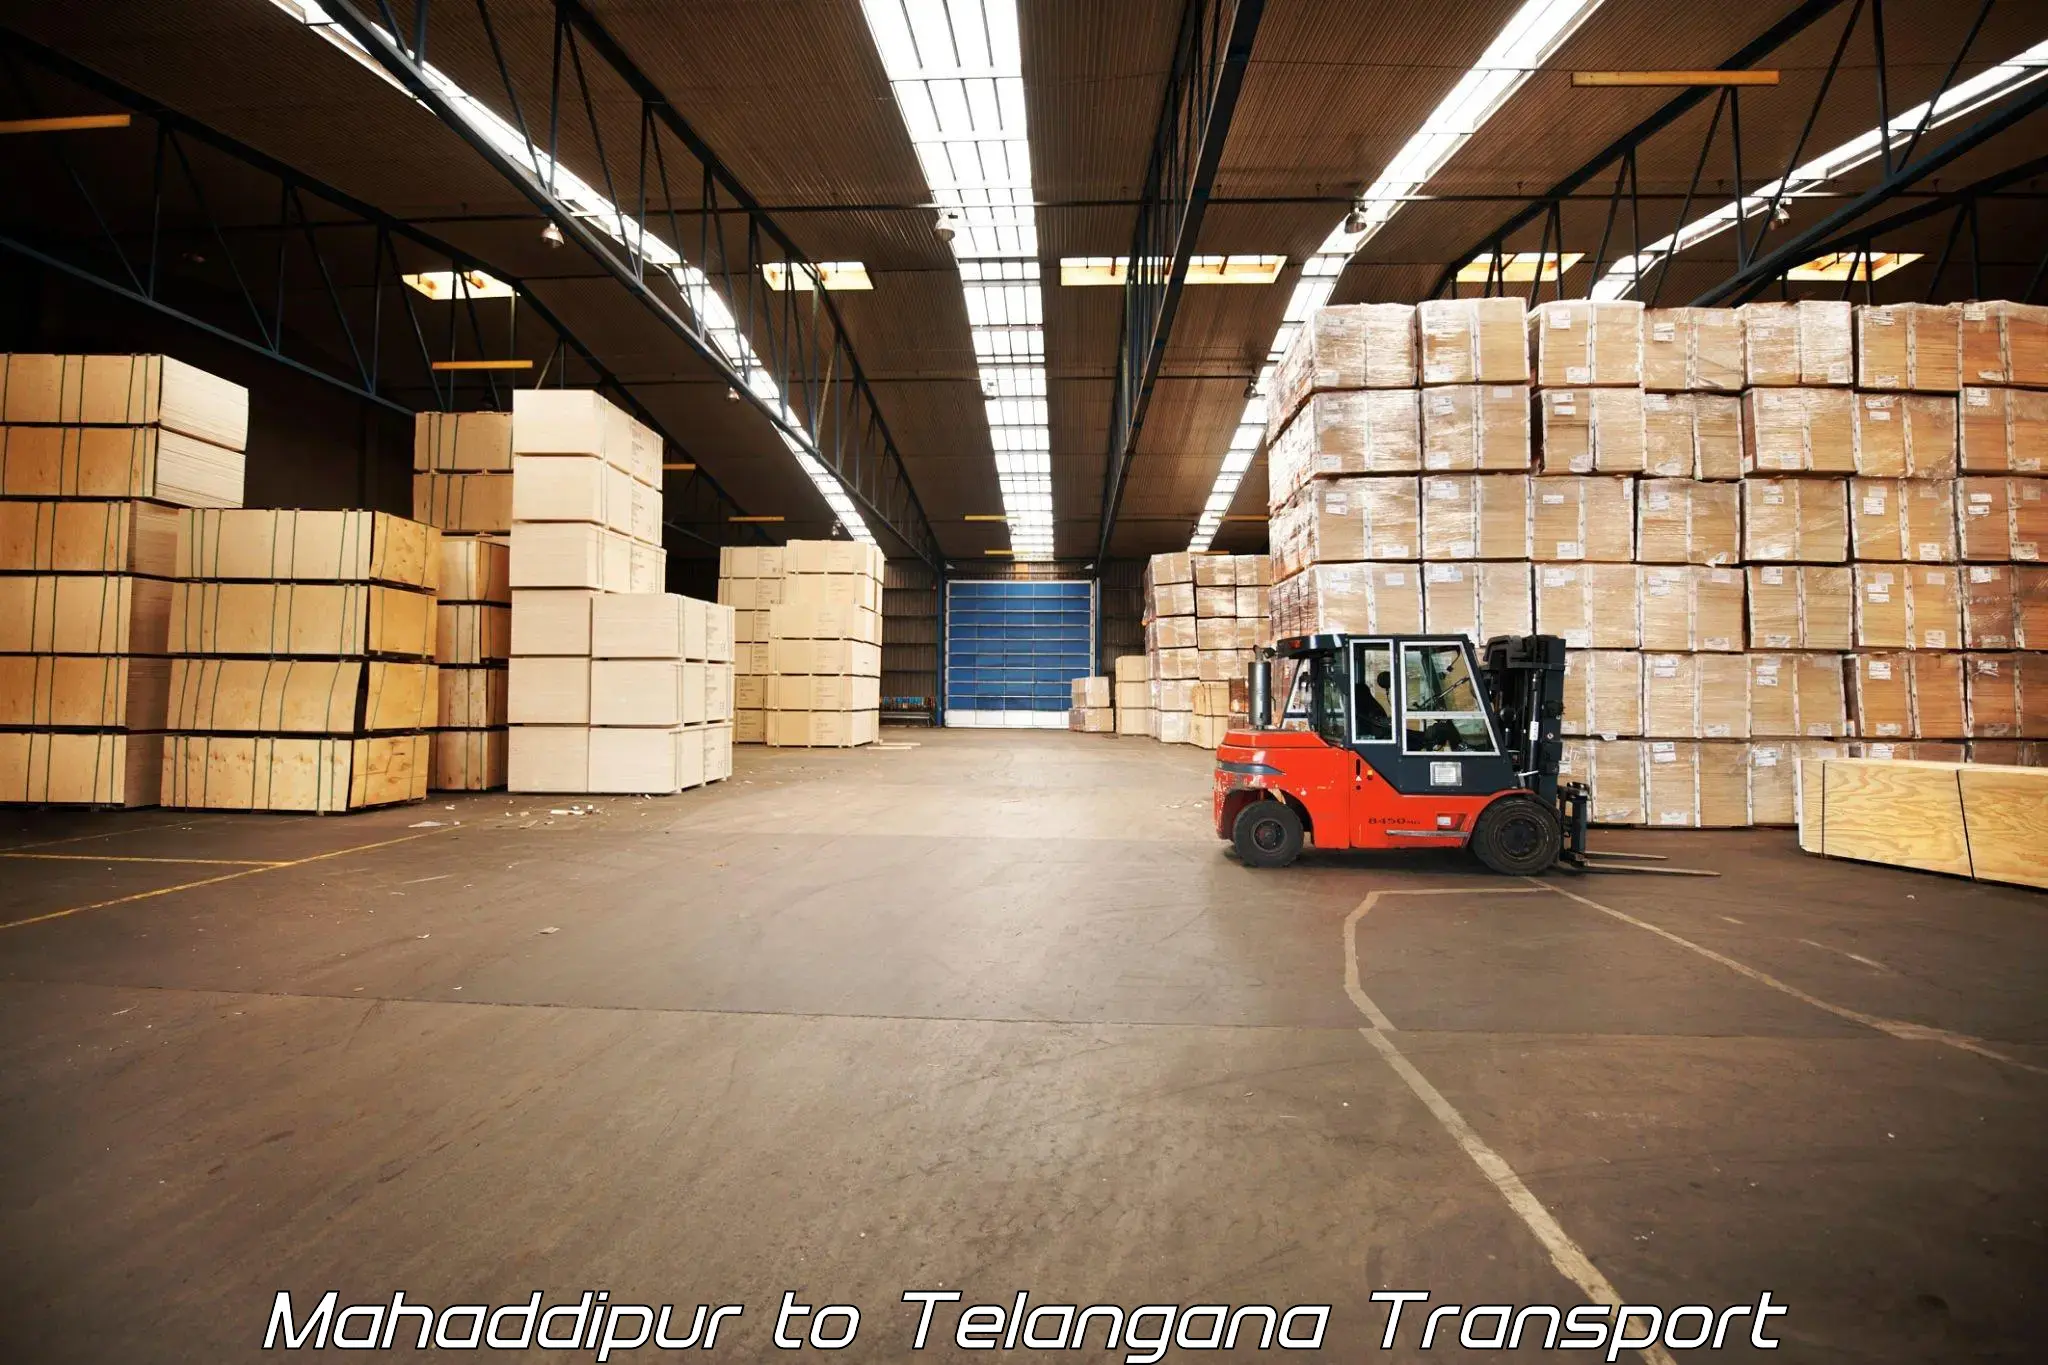 Truck transport companies in India Mahaddipur to Nizamabad